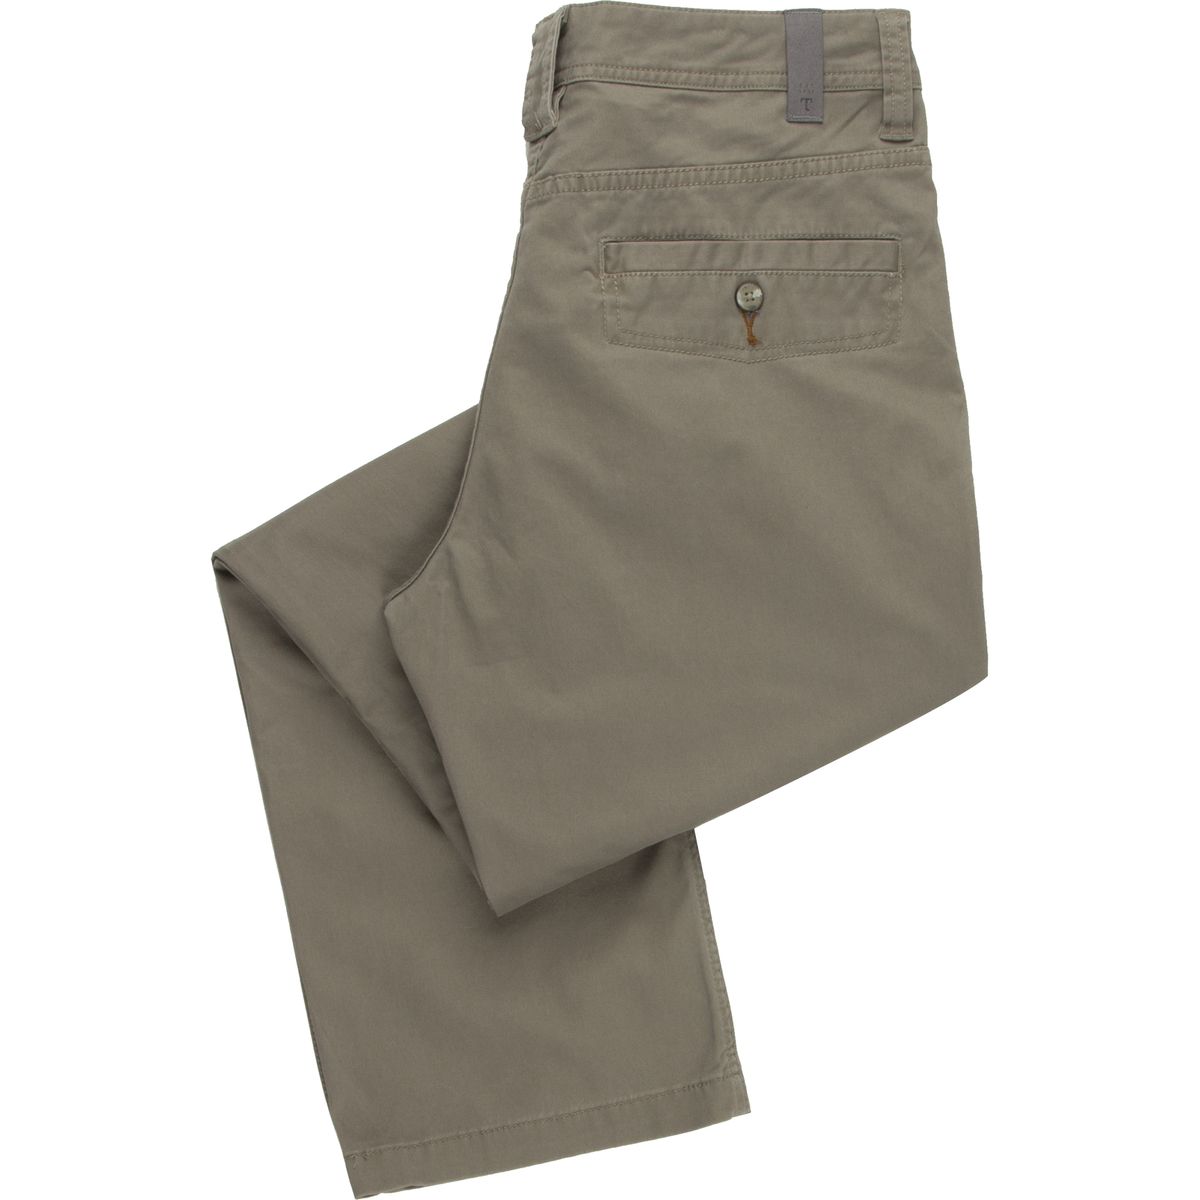 Toad&Co Mission Ridge Pant - Men's - Clothing